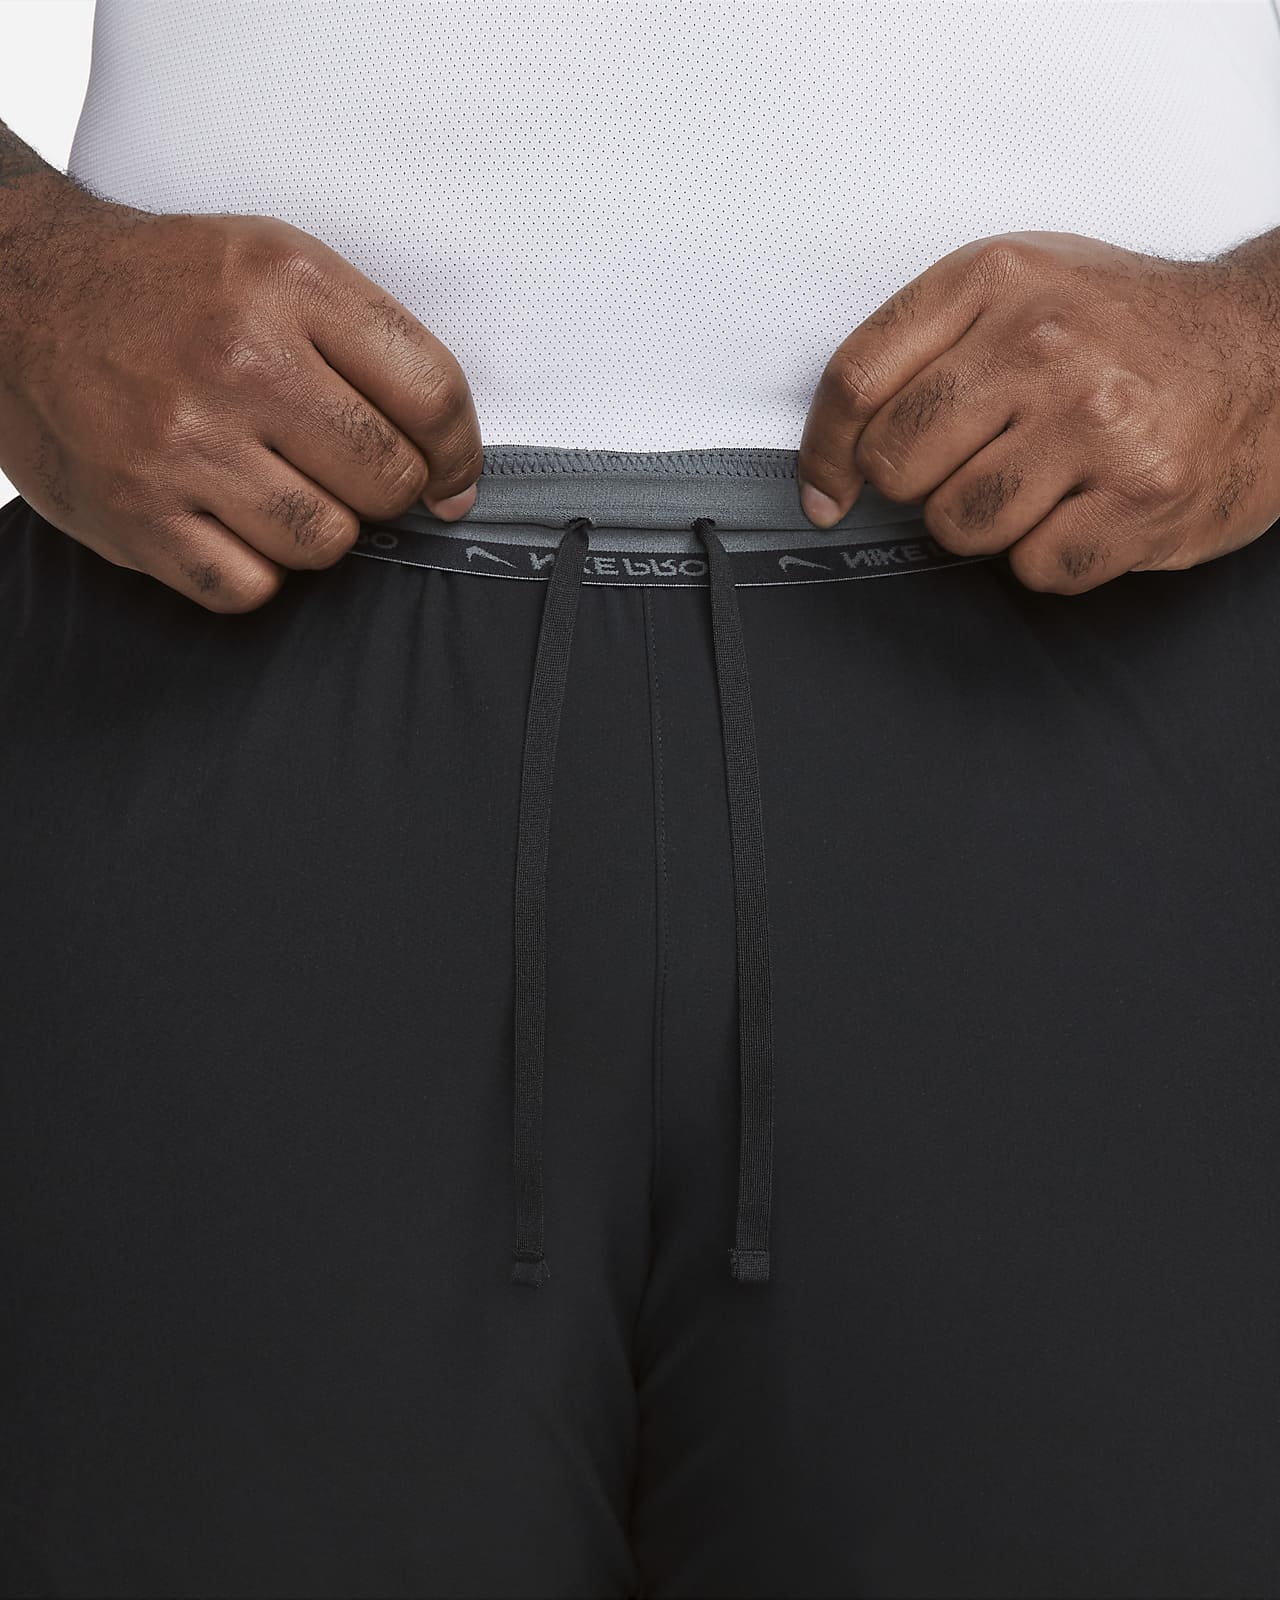 Nike Mens Pro Dri-Fit Compression Shorts – Polished Toyki